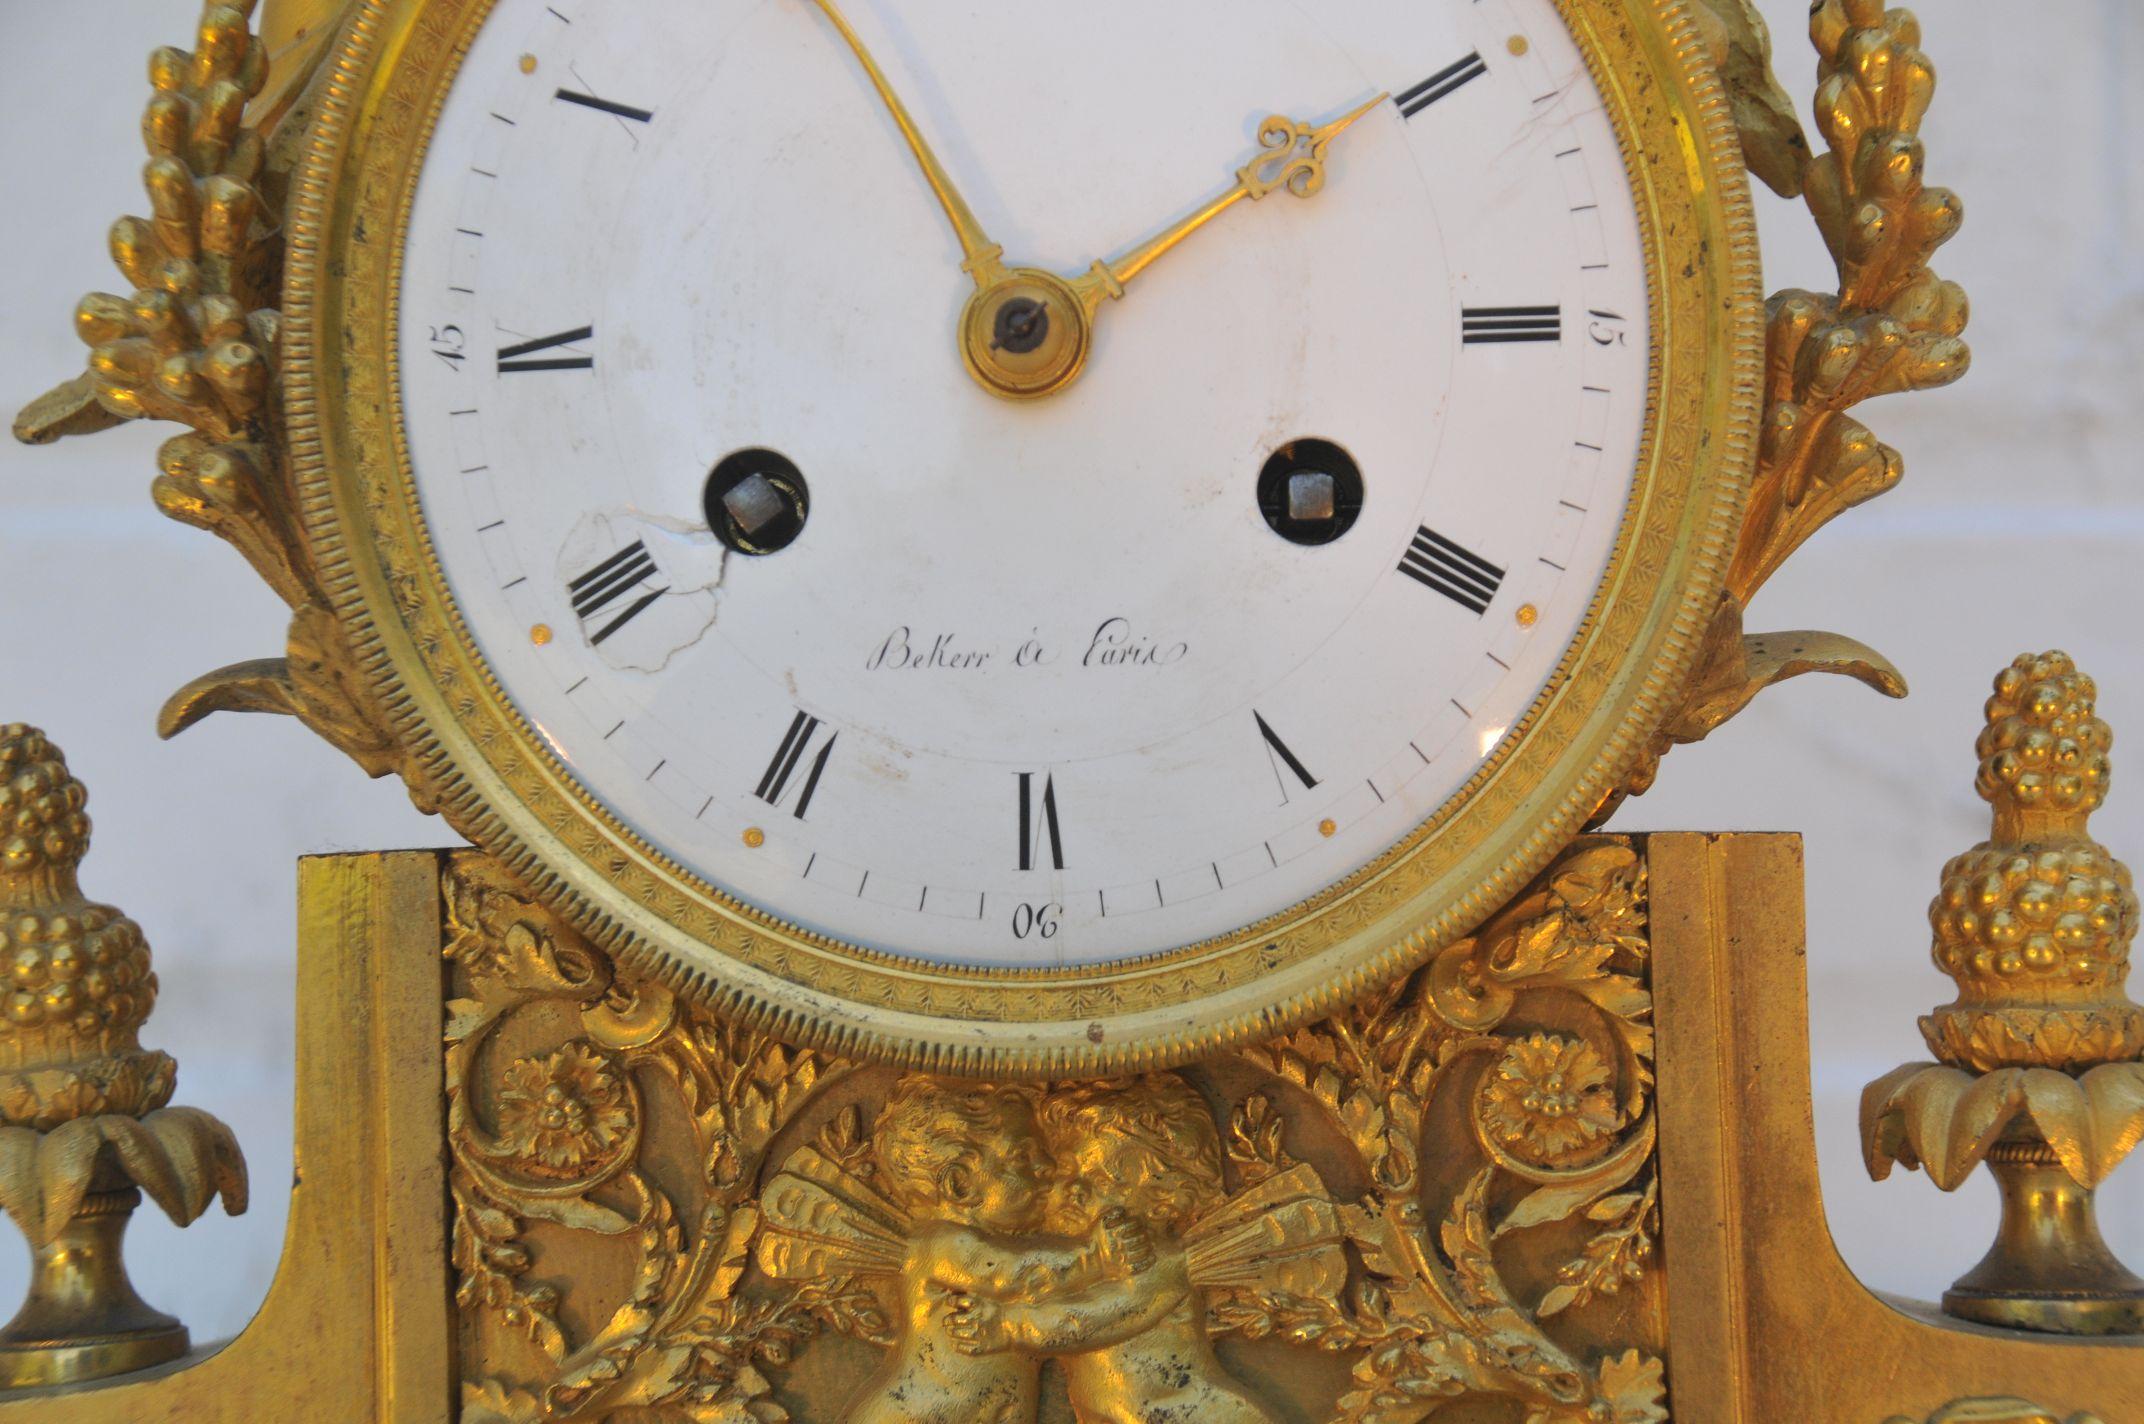 18th Century French Empire Period Ormolu Mantel Clock, Signed Bekeer à Paris, circa 1804 For Sale